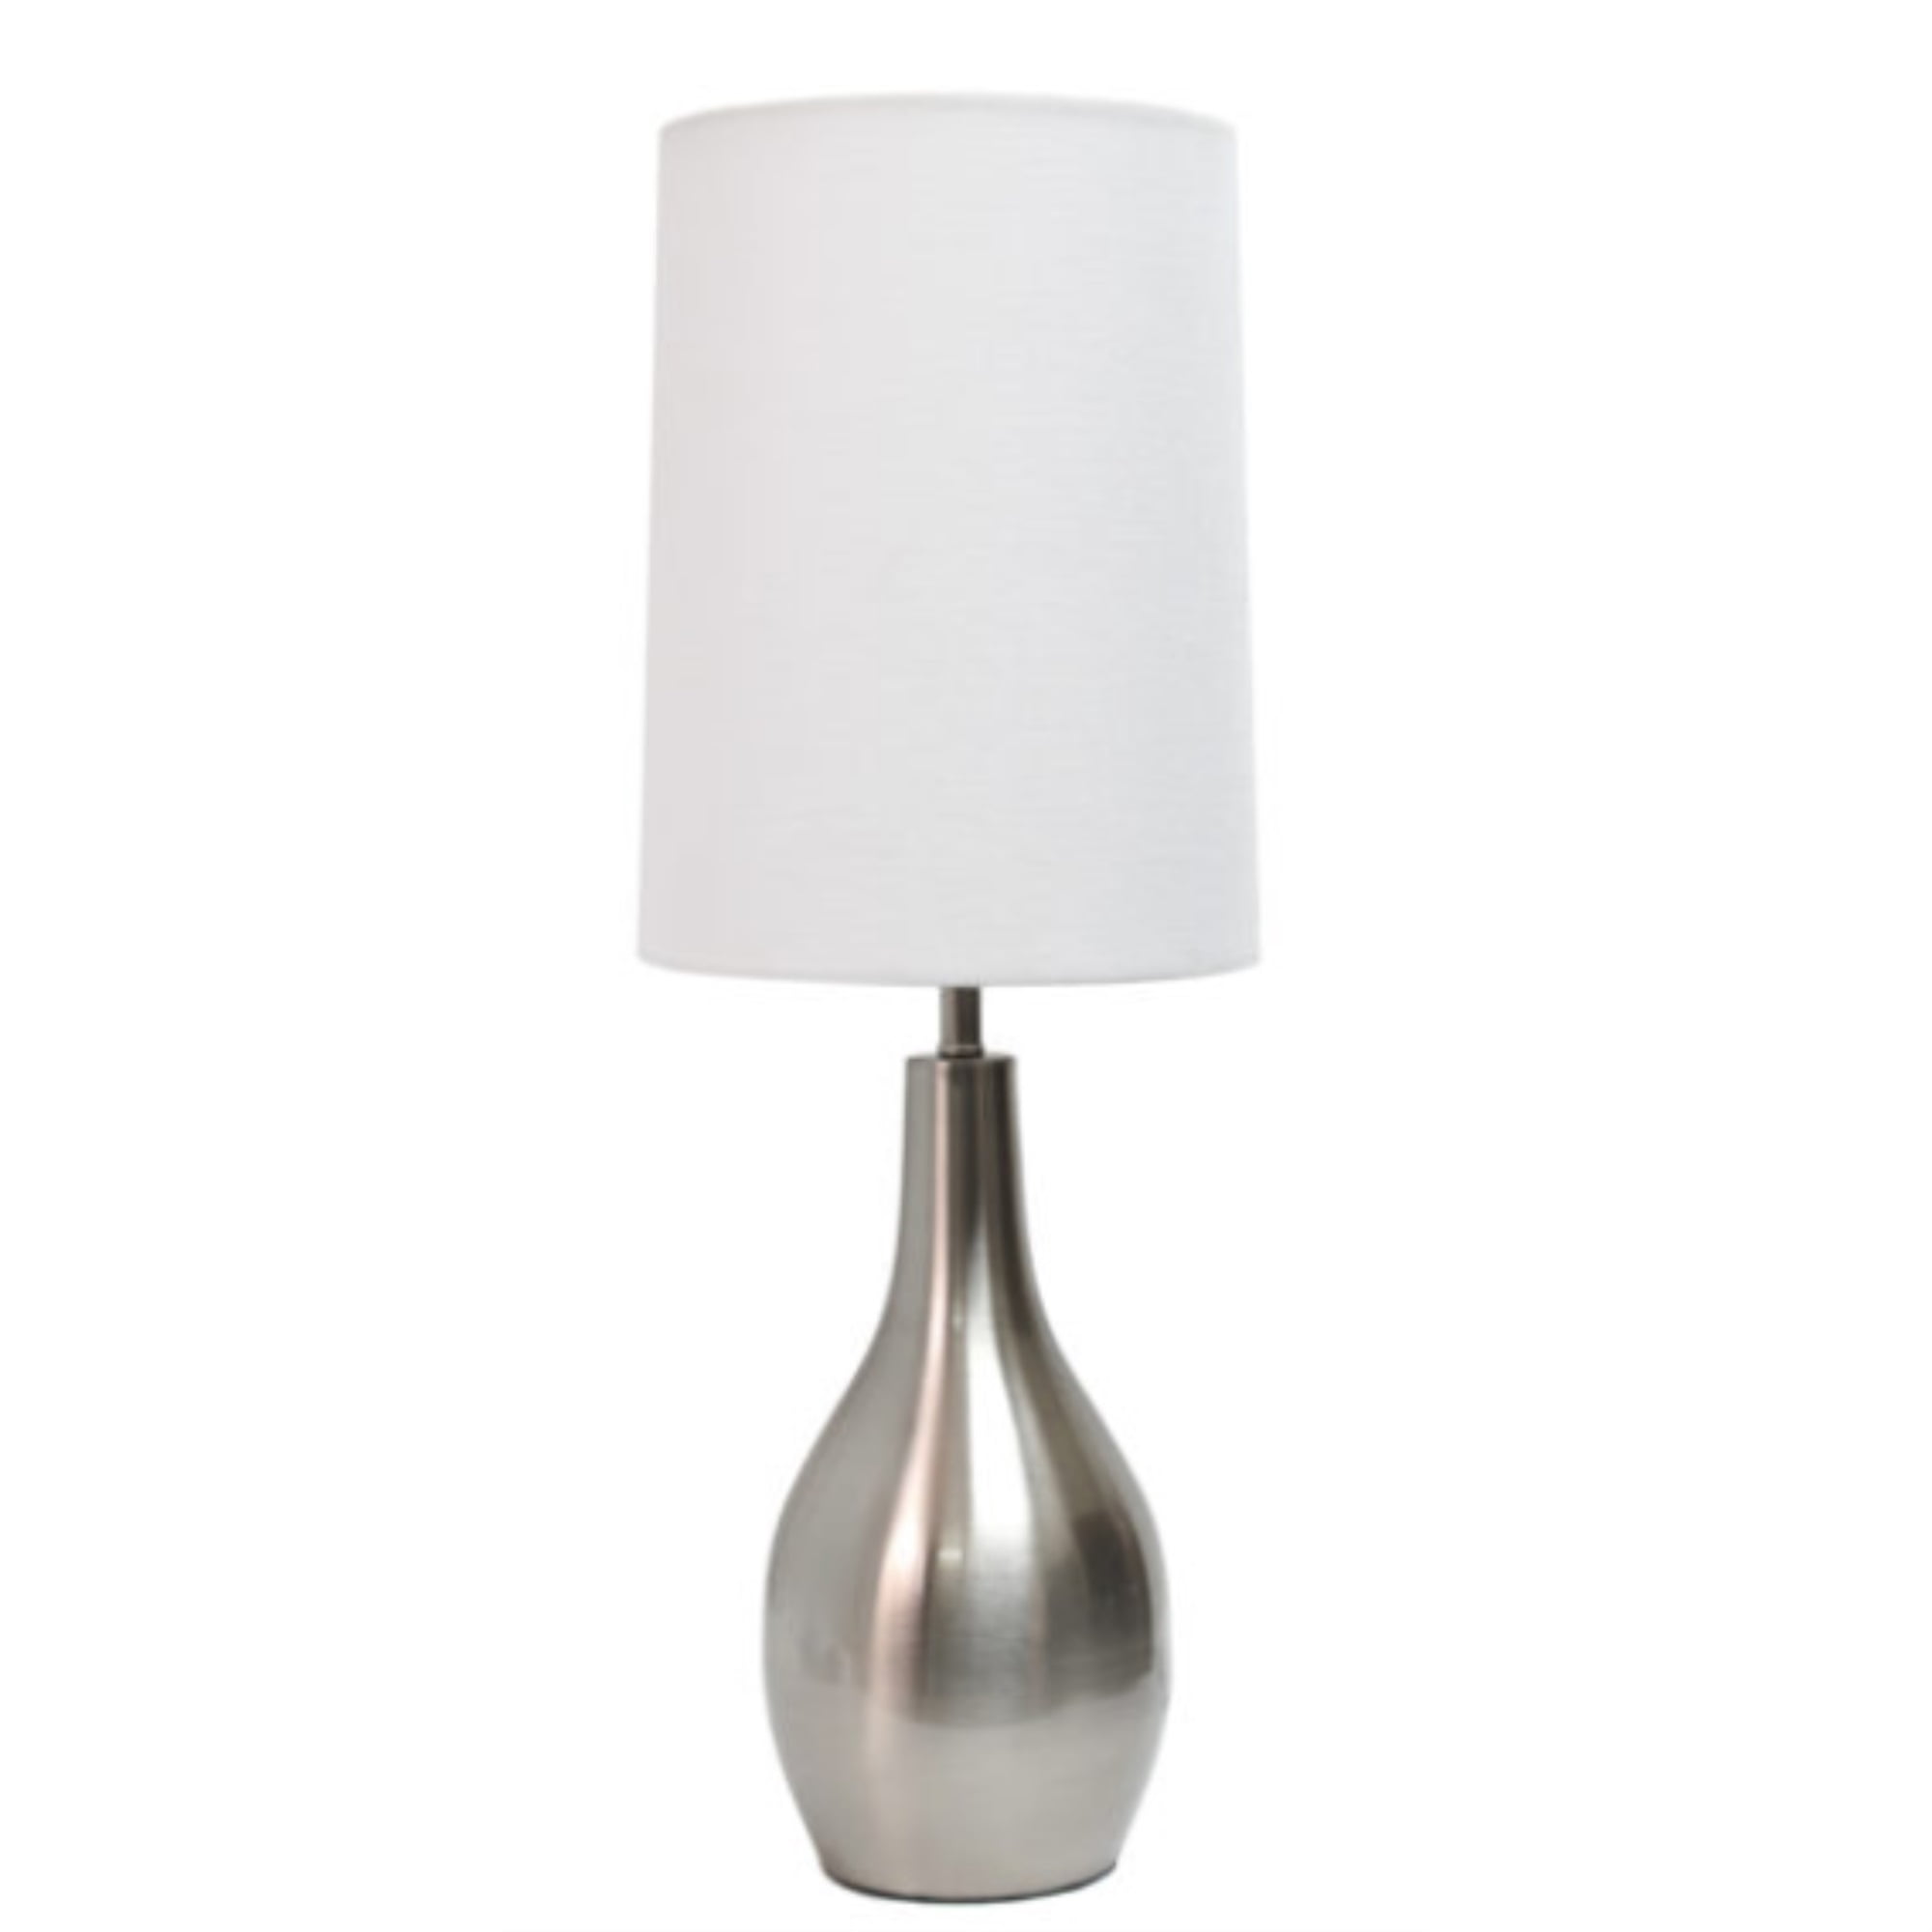 Lt3303-bsn 1 Light Tear Drop Table Lamp, Brushed Nickel